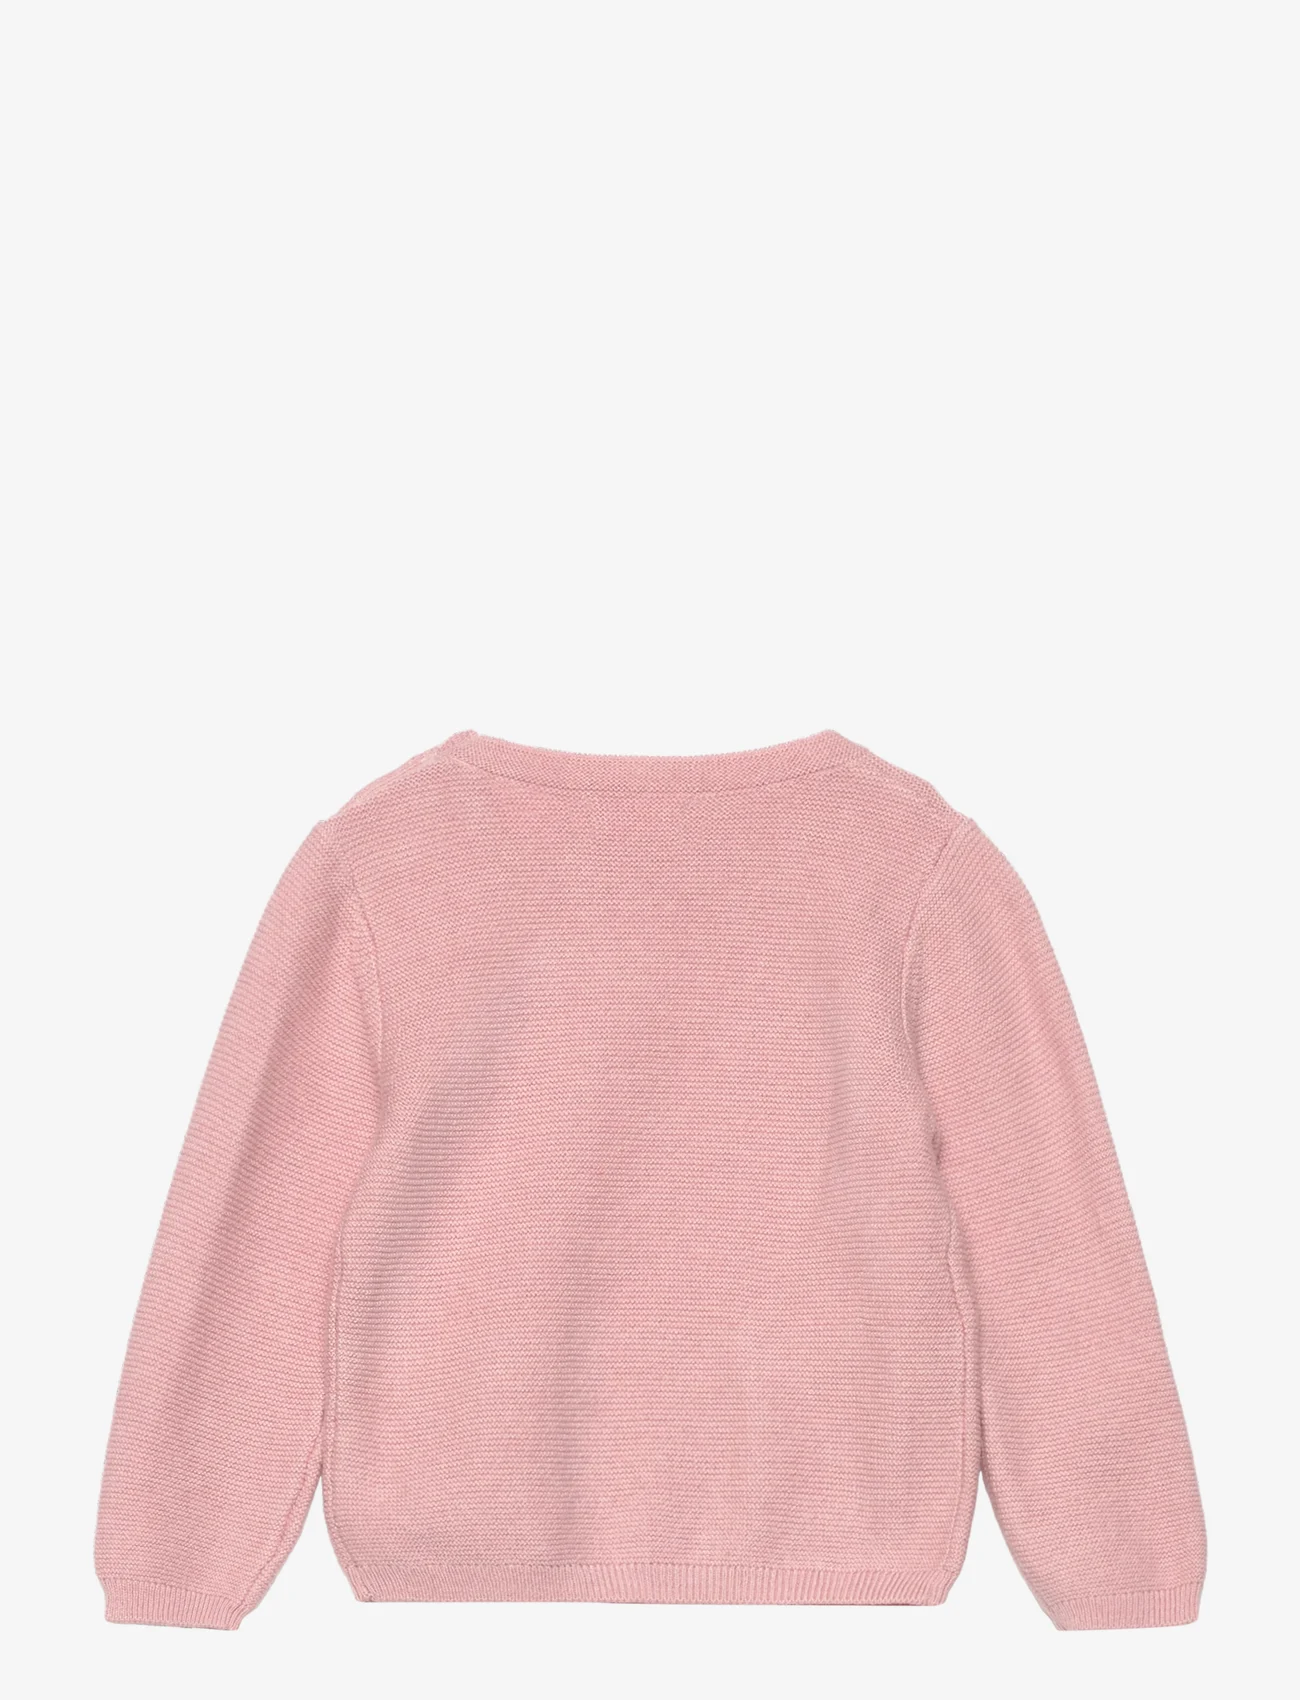 Mango - Knit pockets sweater - neulepuserot - lt-pastel pink - 1